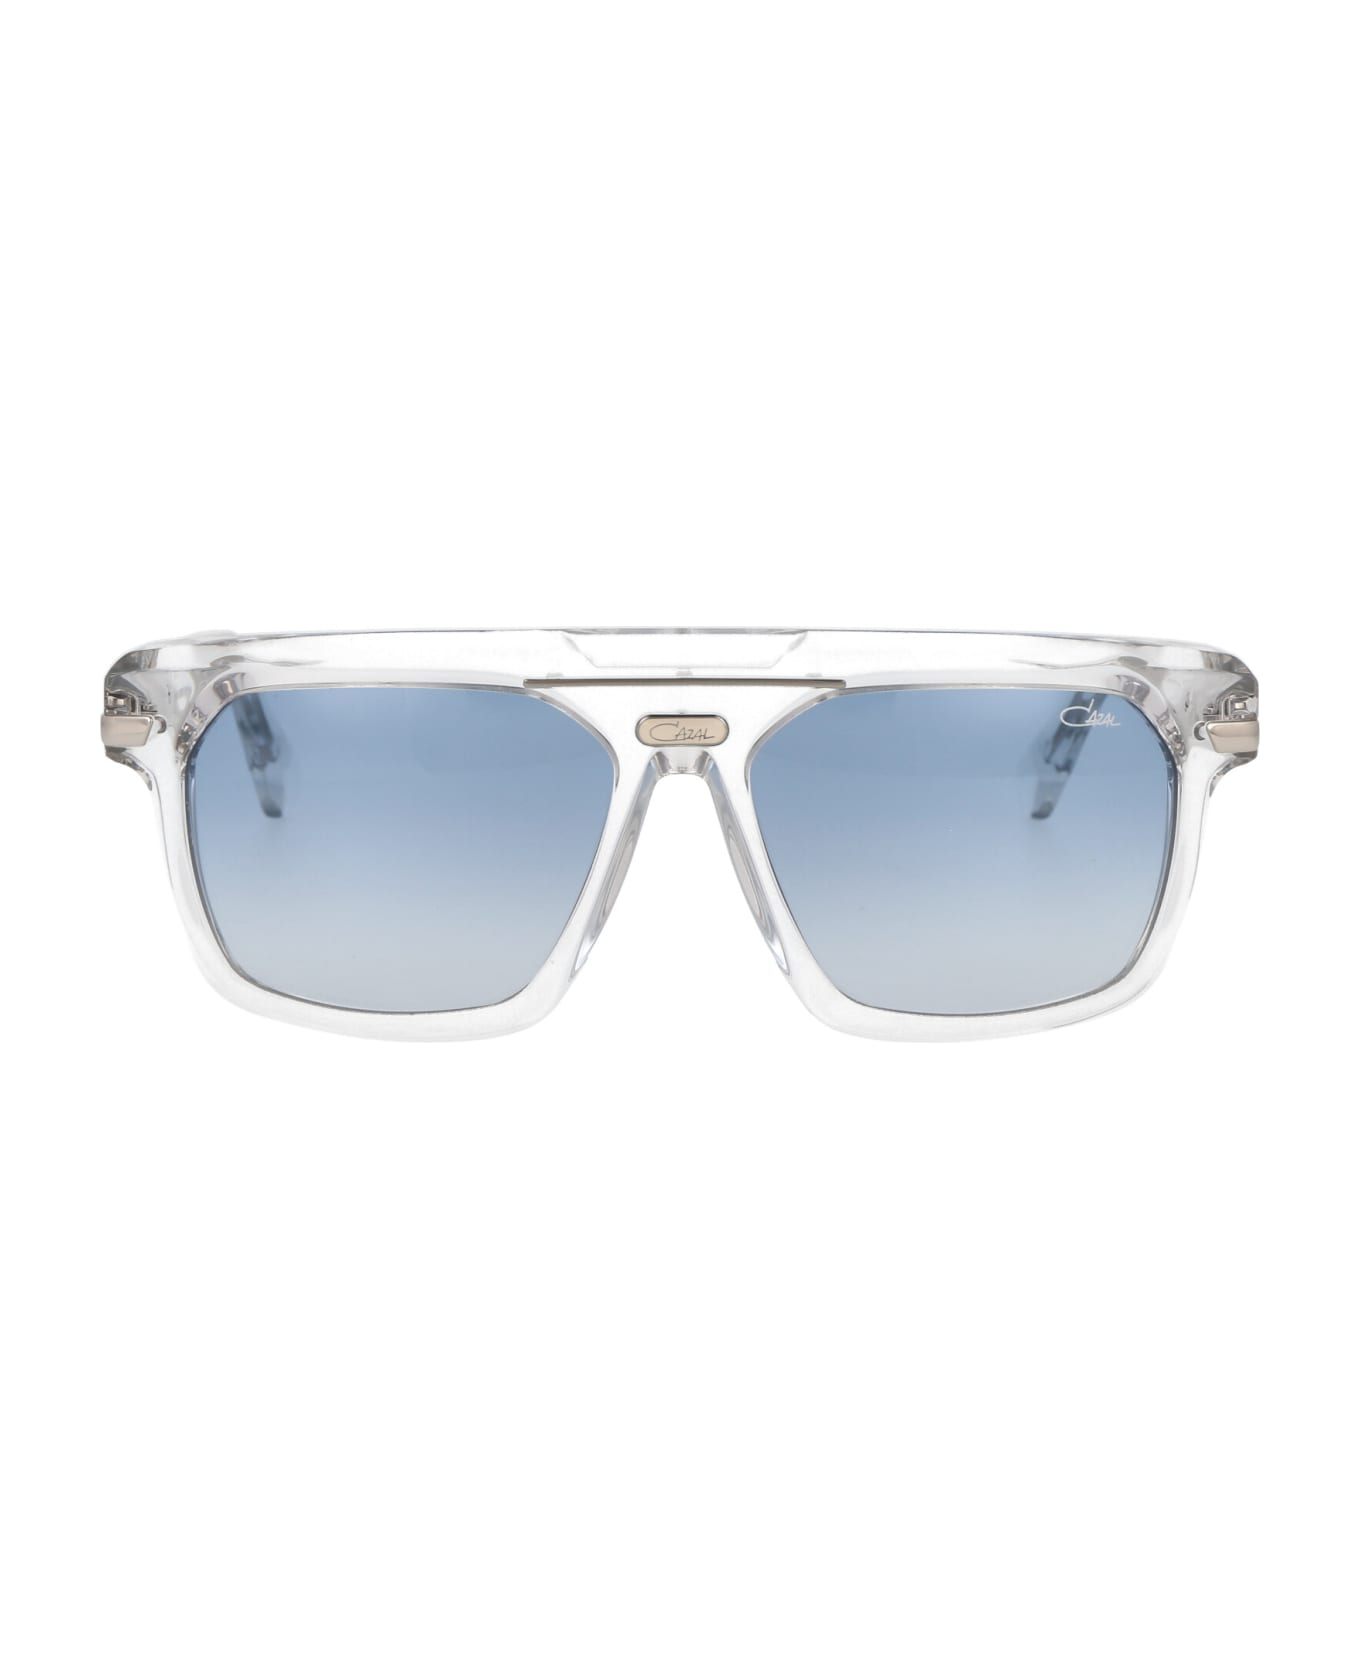 Cazal Mod. 8040 Sunglasses Men - 002 CRYSTAL